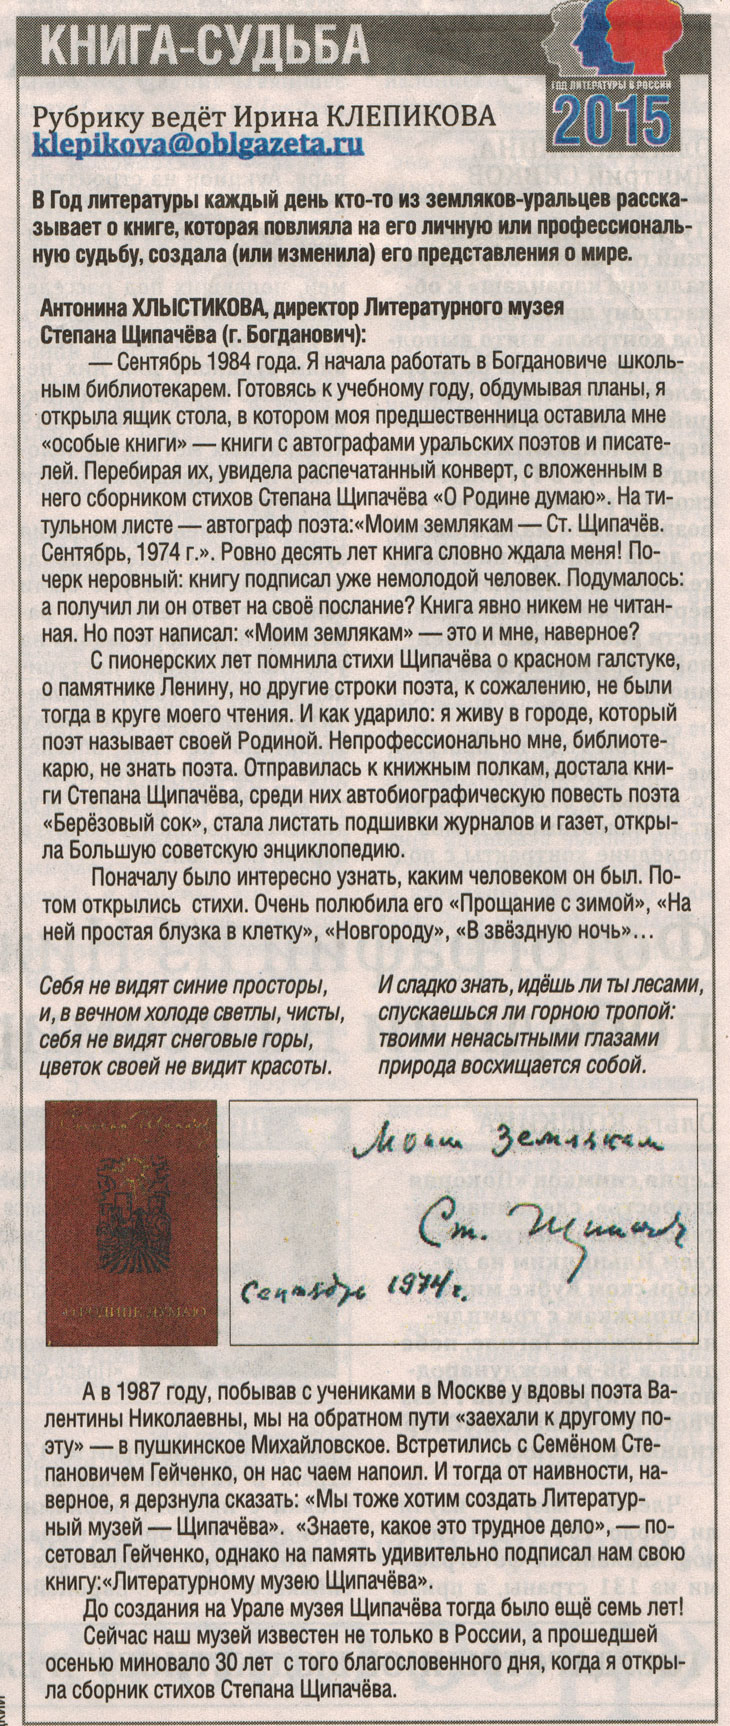 Областная газета - Книга-Судьба (14.02.2015г.)